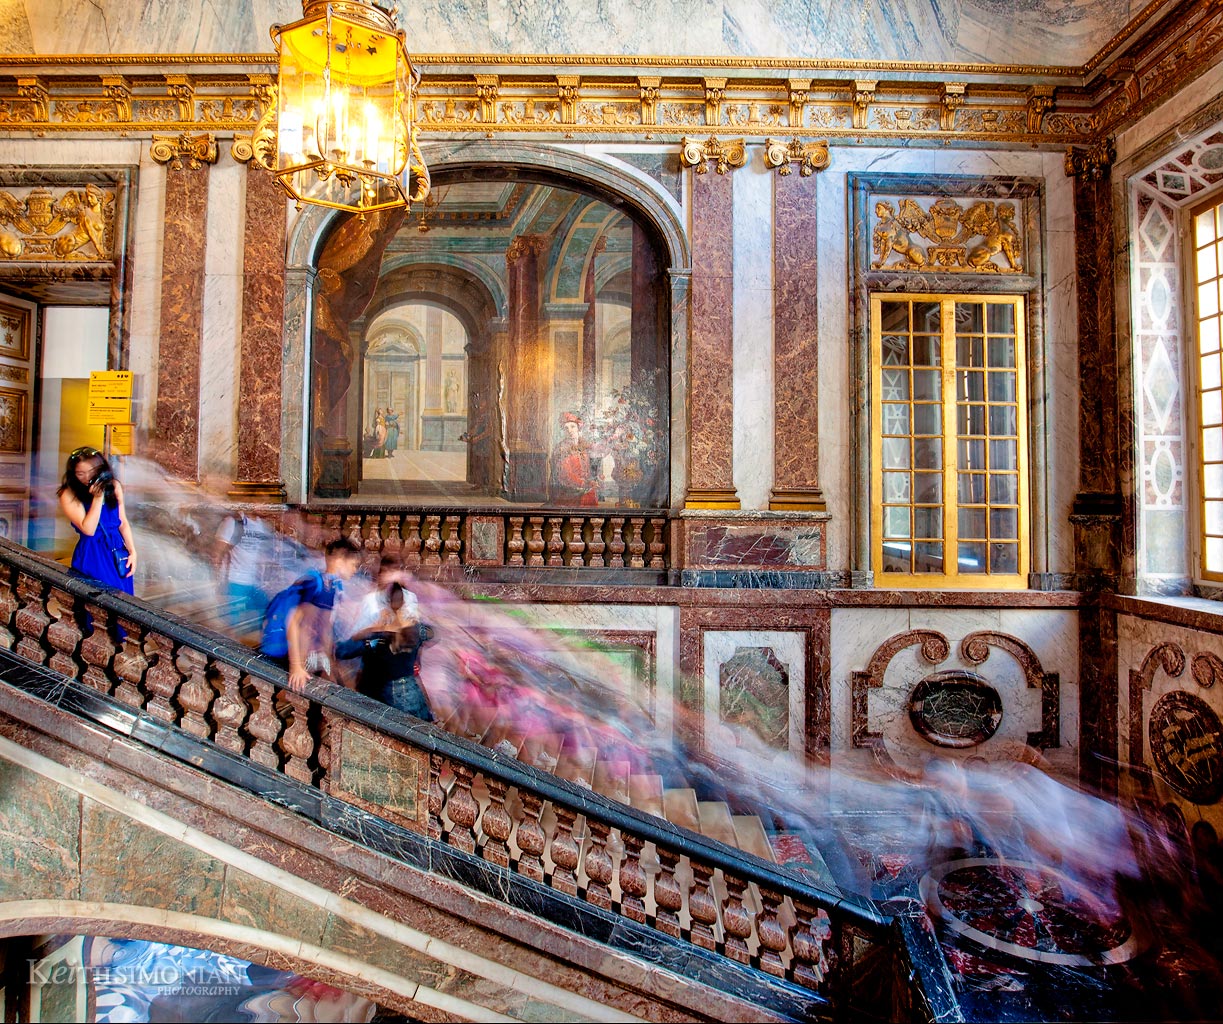 IMAGE: https://ksimonian.com/Images/Staircase-Versailles.jpg